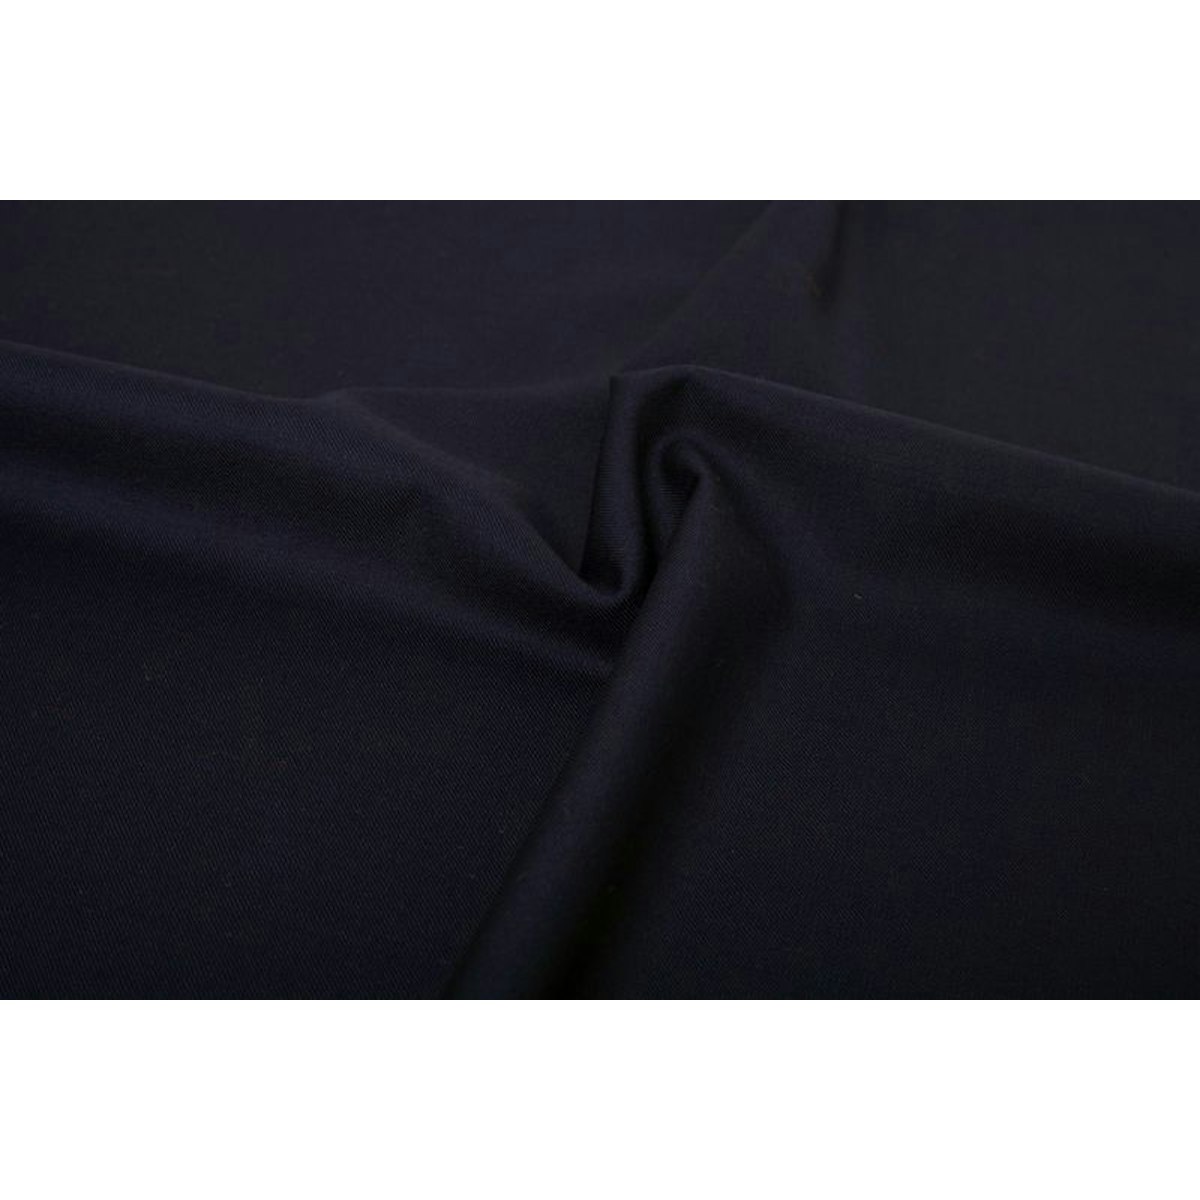 InStitchu Suit Fabric 16